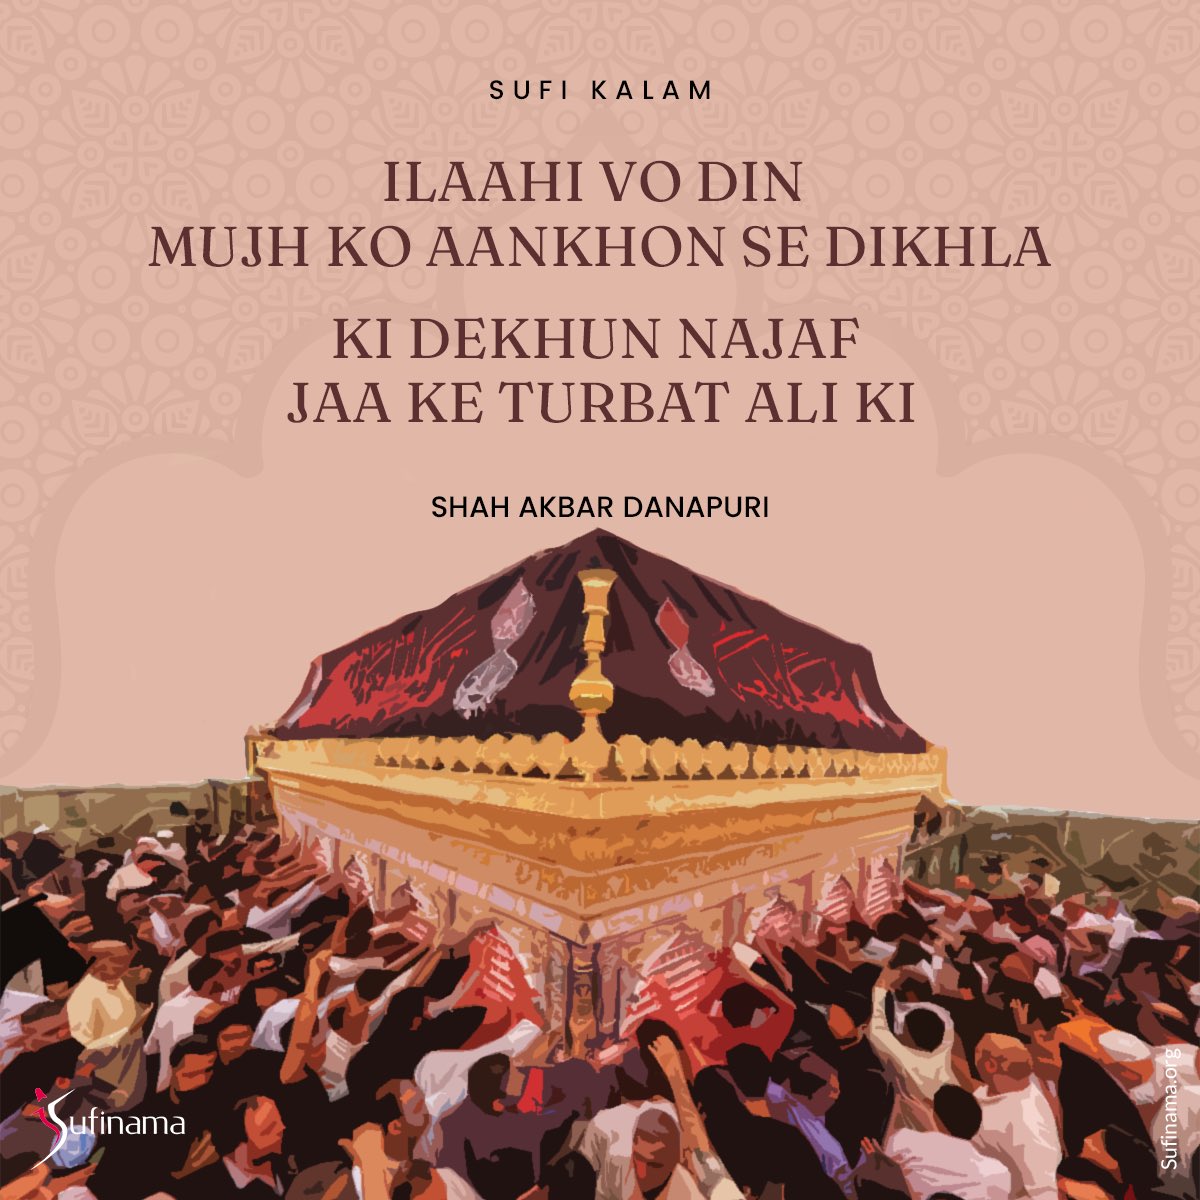 Sufi Kalam 

#Shayari #UrduShayari #Urduadab #maulaali #HazratAli #Sufism #shahakbardanapuri #Sufinama